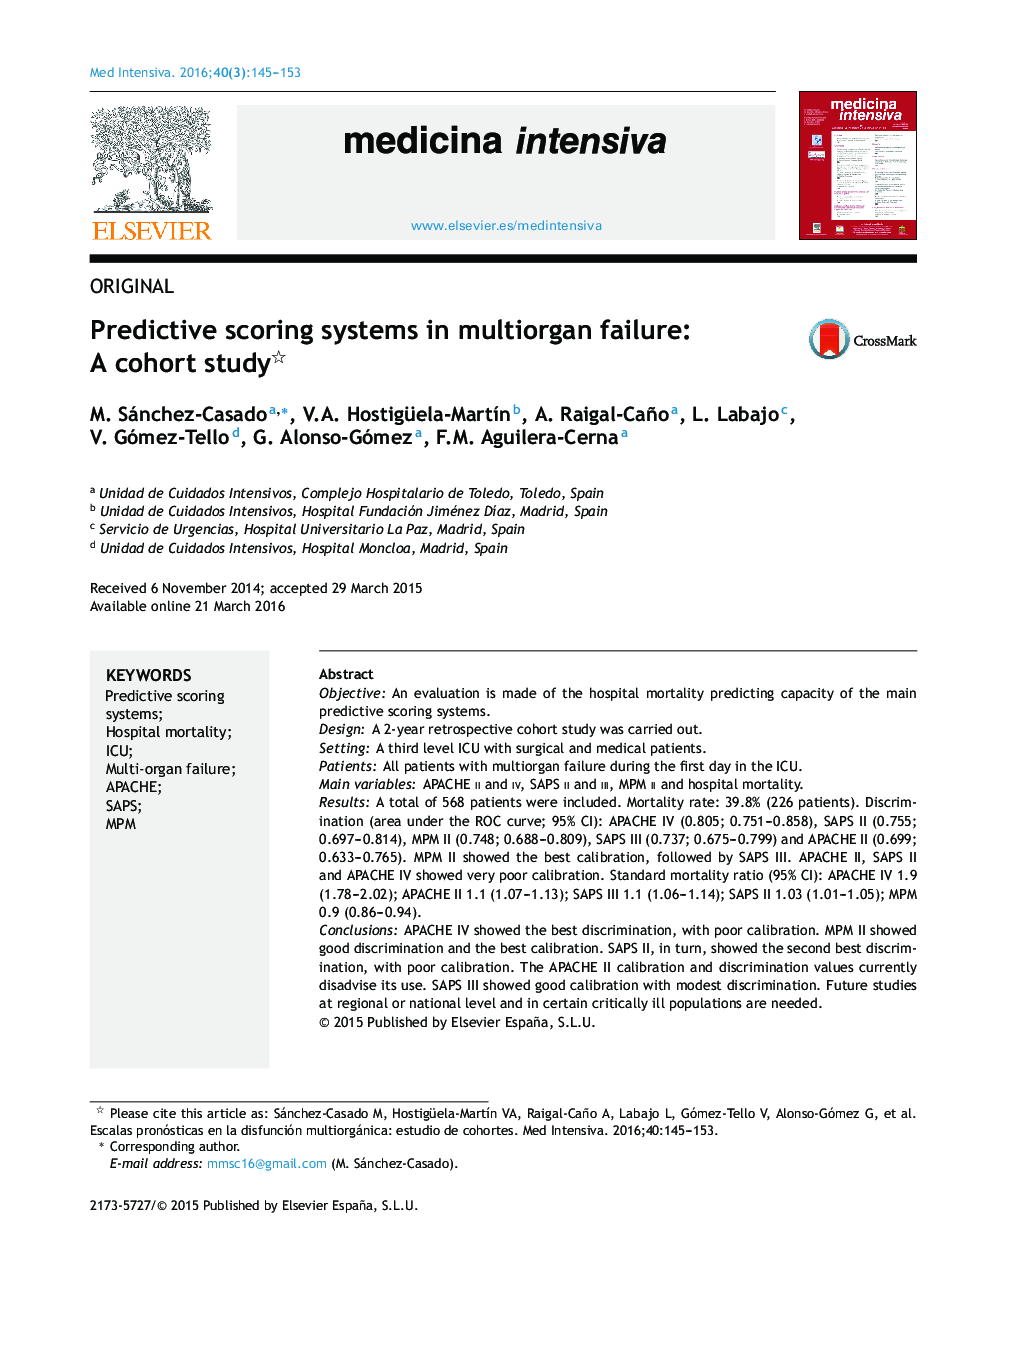 Predictive scoring systems in multiorgan failure: A cohort study 